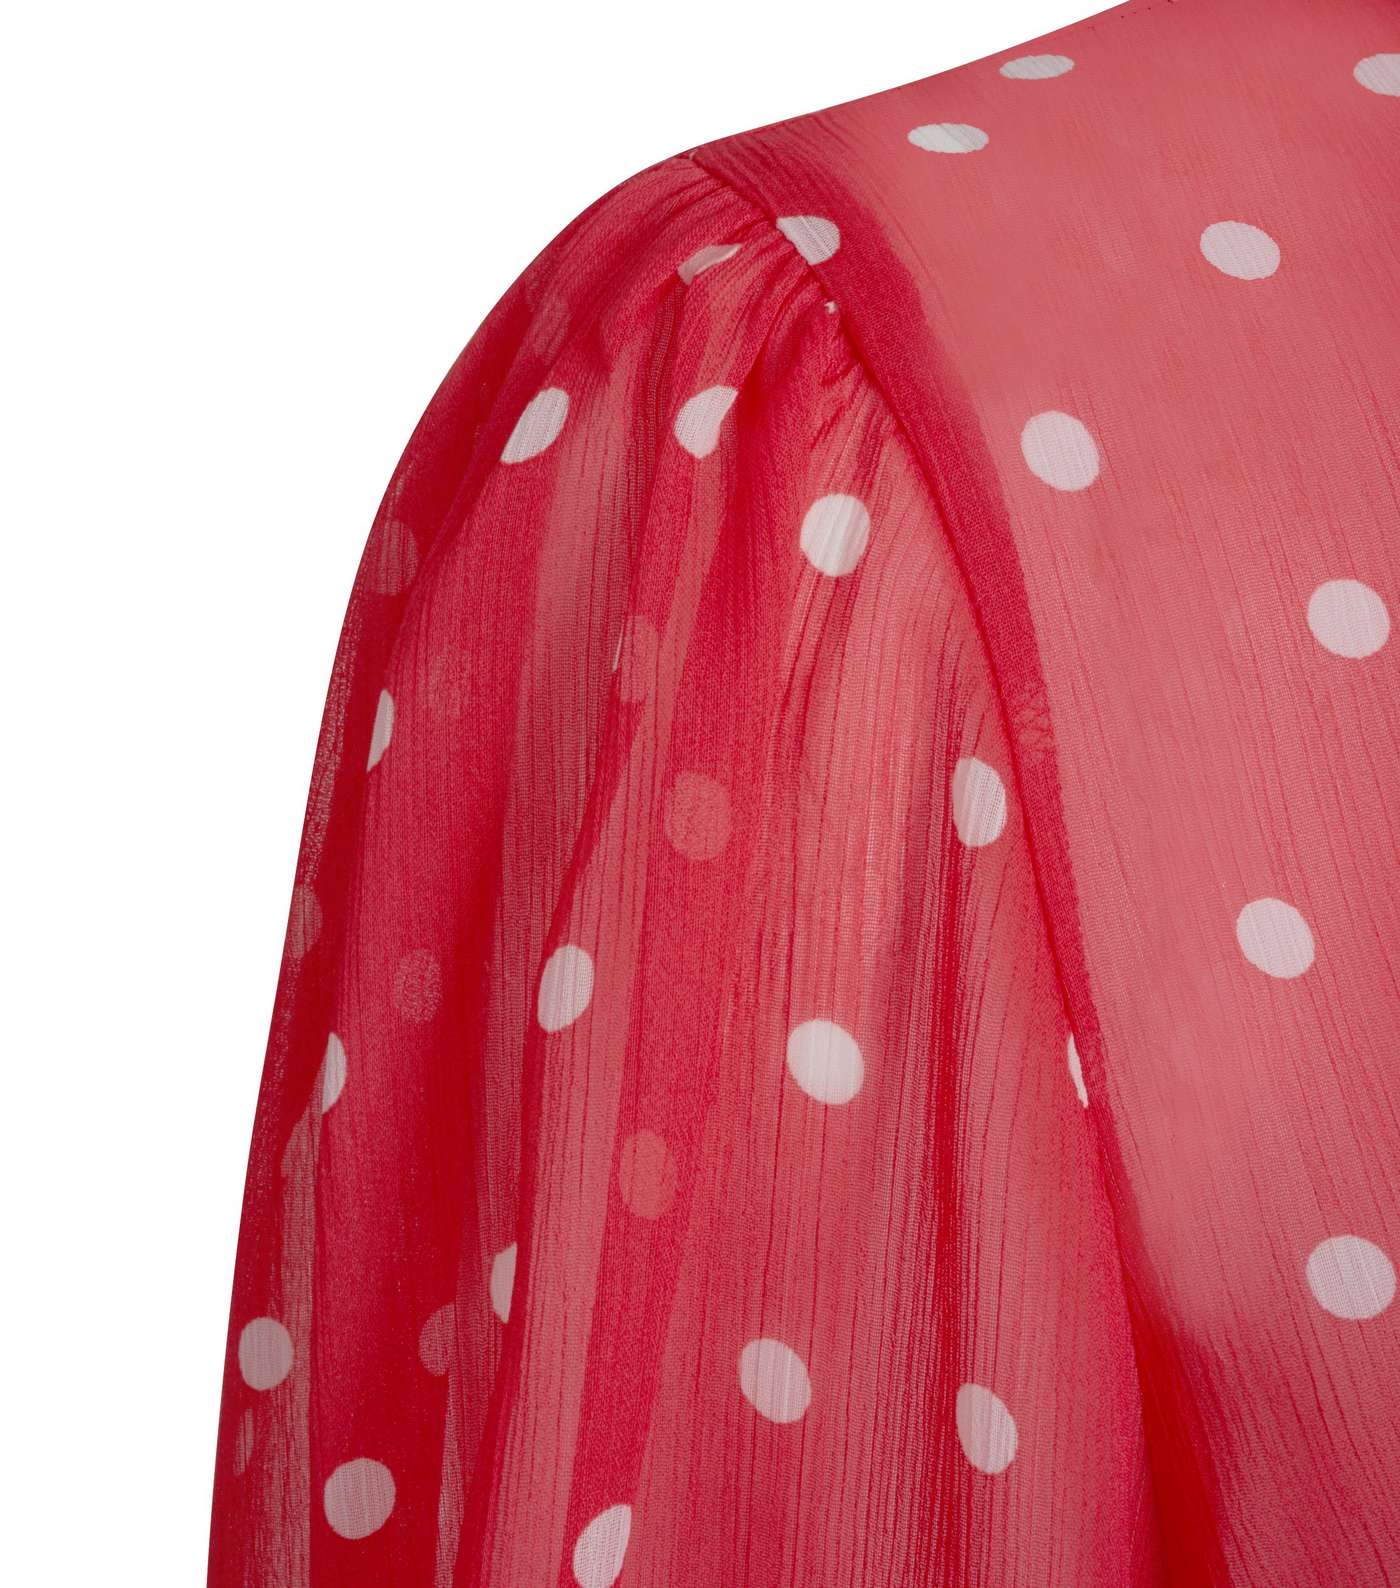 Red Spot Textured Chiffon Shirt Image 3